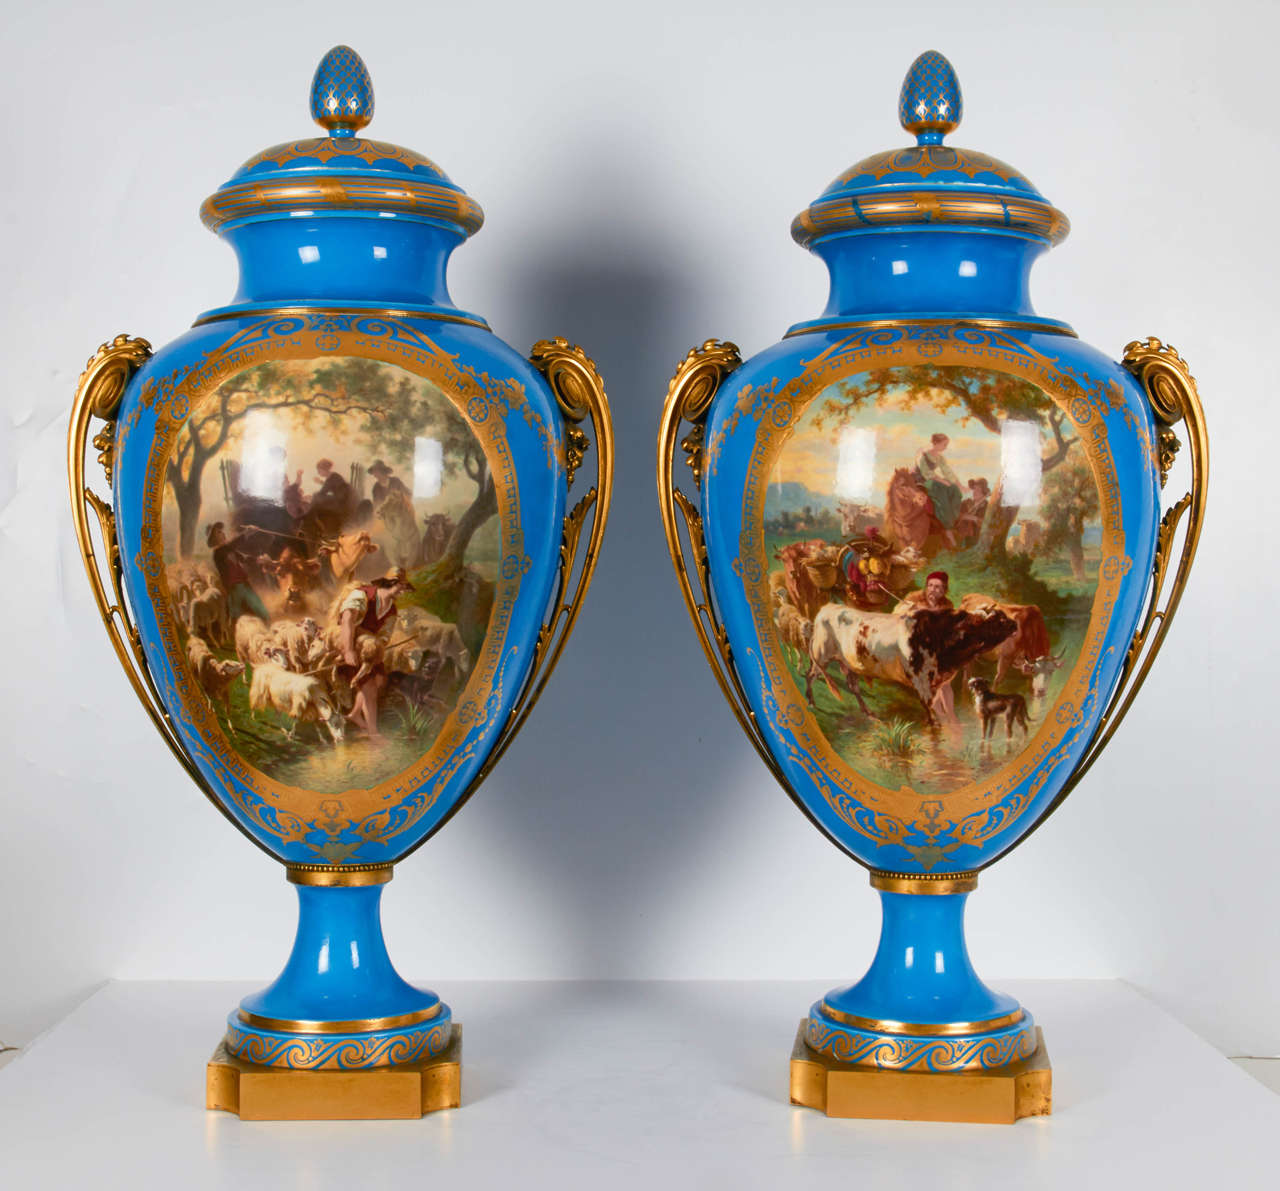 A large pair of ormolu-mounted Se`vres Porcelain Bleu Celeste '1867 Exhibition' vases and covers (‘Vase Paris de Milieu Garnis’), ‘l’Abreuvoir’ and ‘Le Retour’ De Champs’
1860, one cover incised 69 and 5, the gilding by E.F. Blanchard, the painting